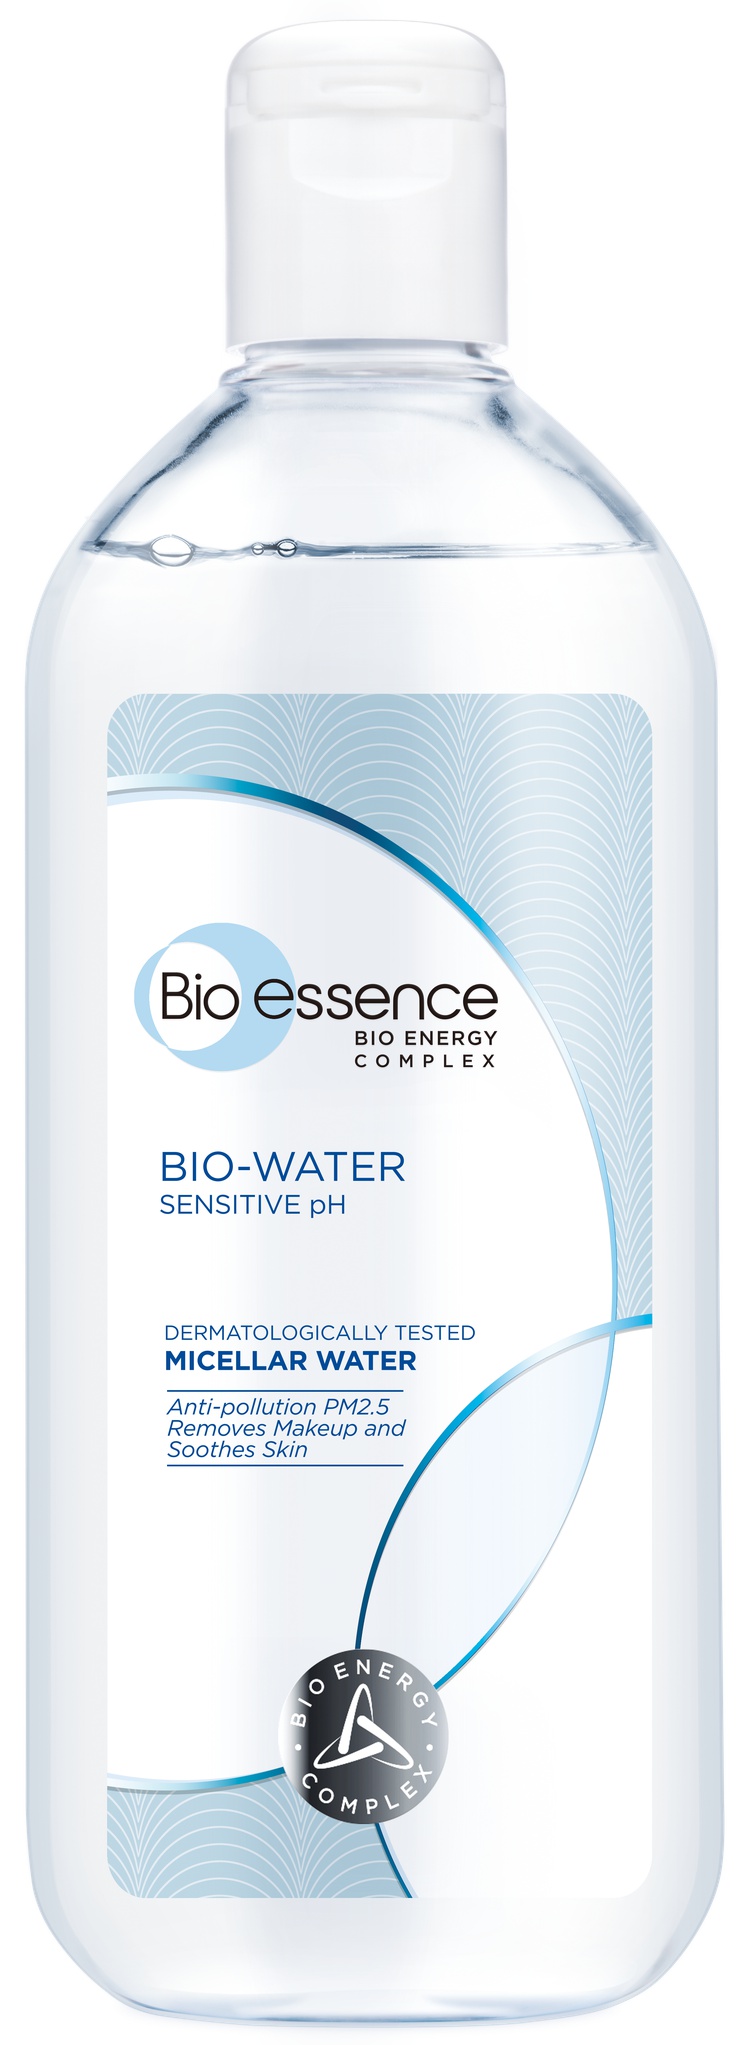 Bio essence Micellar Water